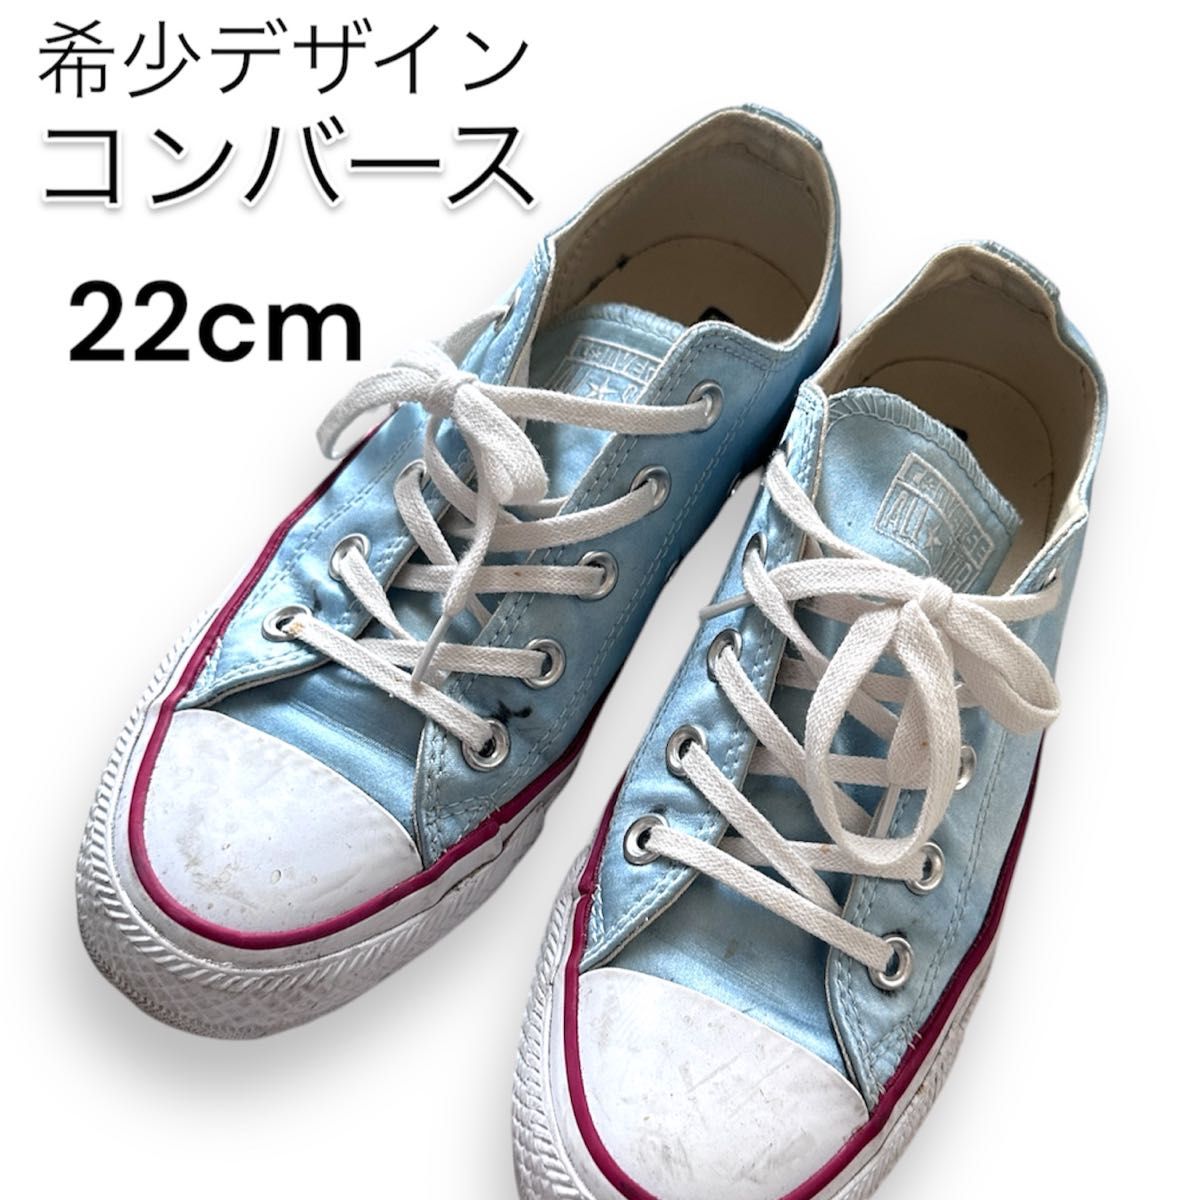 【CONVERSE】スニーカー 22cm 海外 デザイン ブルー × レッド  オールスター 靴 シューズ レディース コンバース